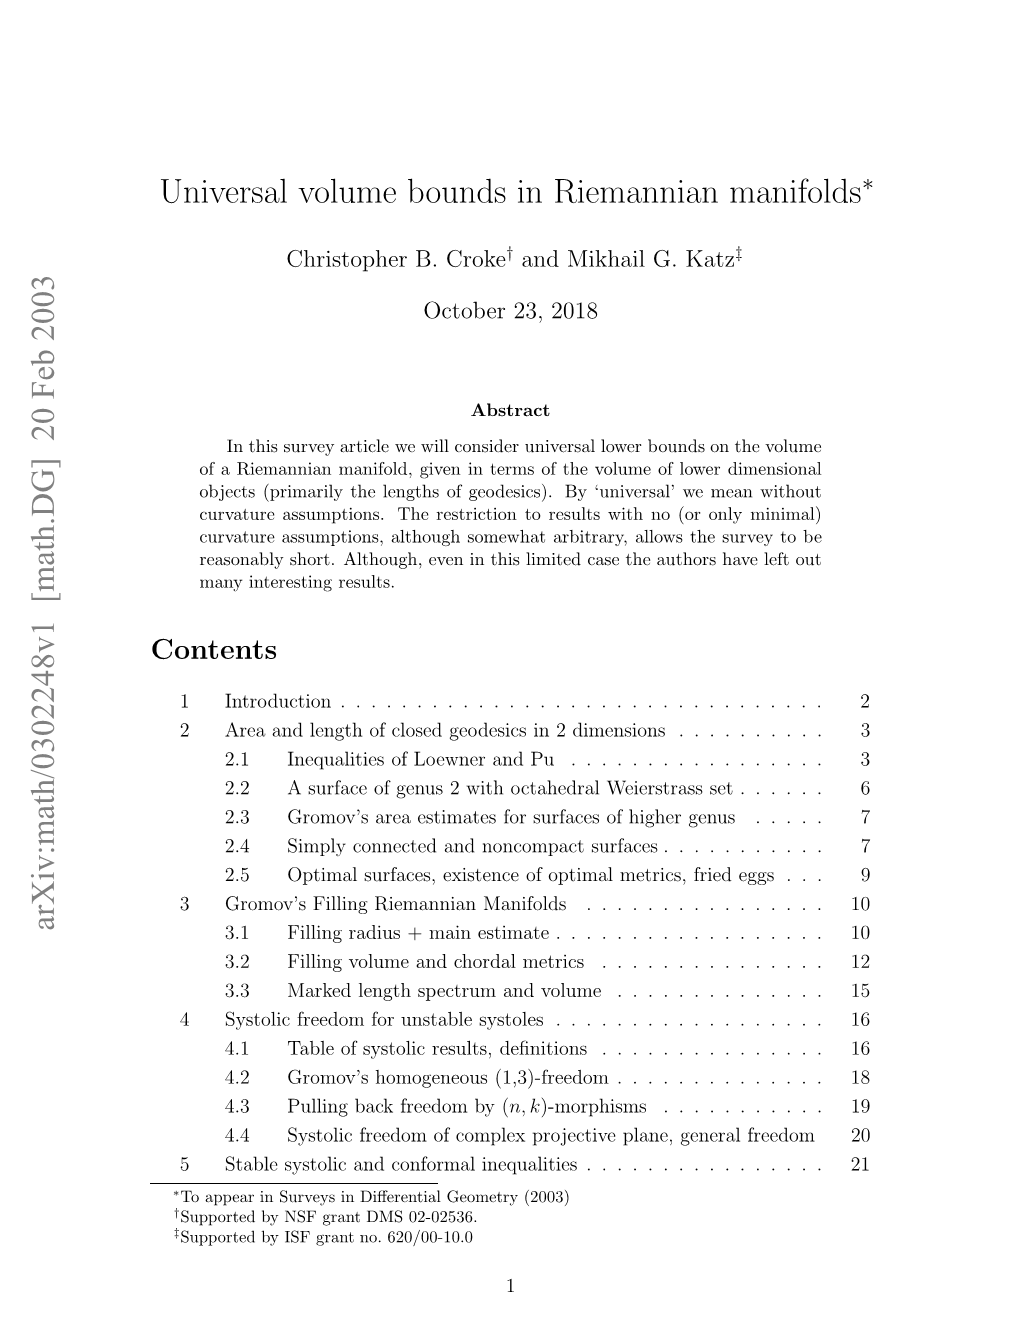 Universal Volume Bounds in Riemannian Manifolds